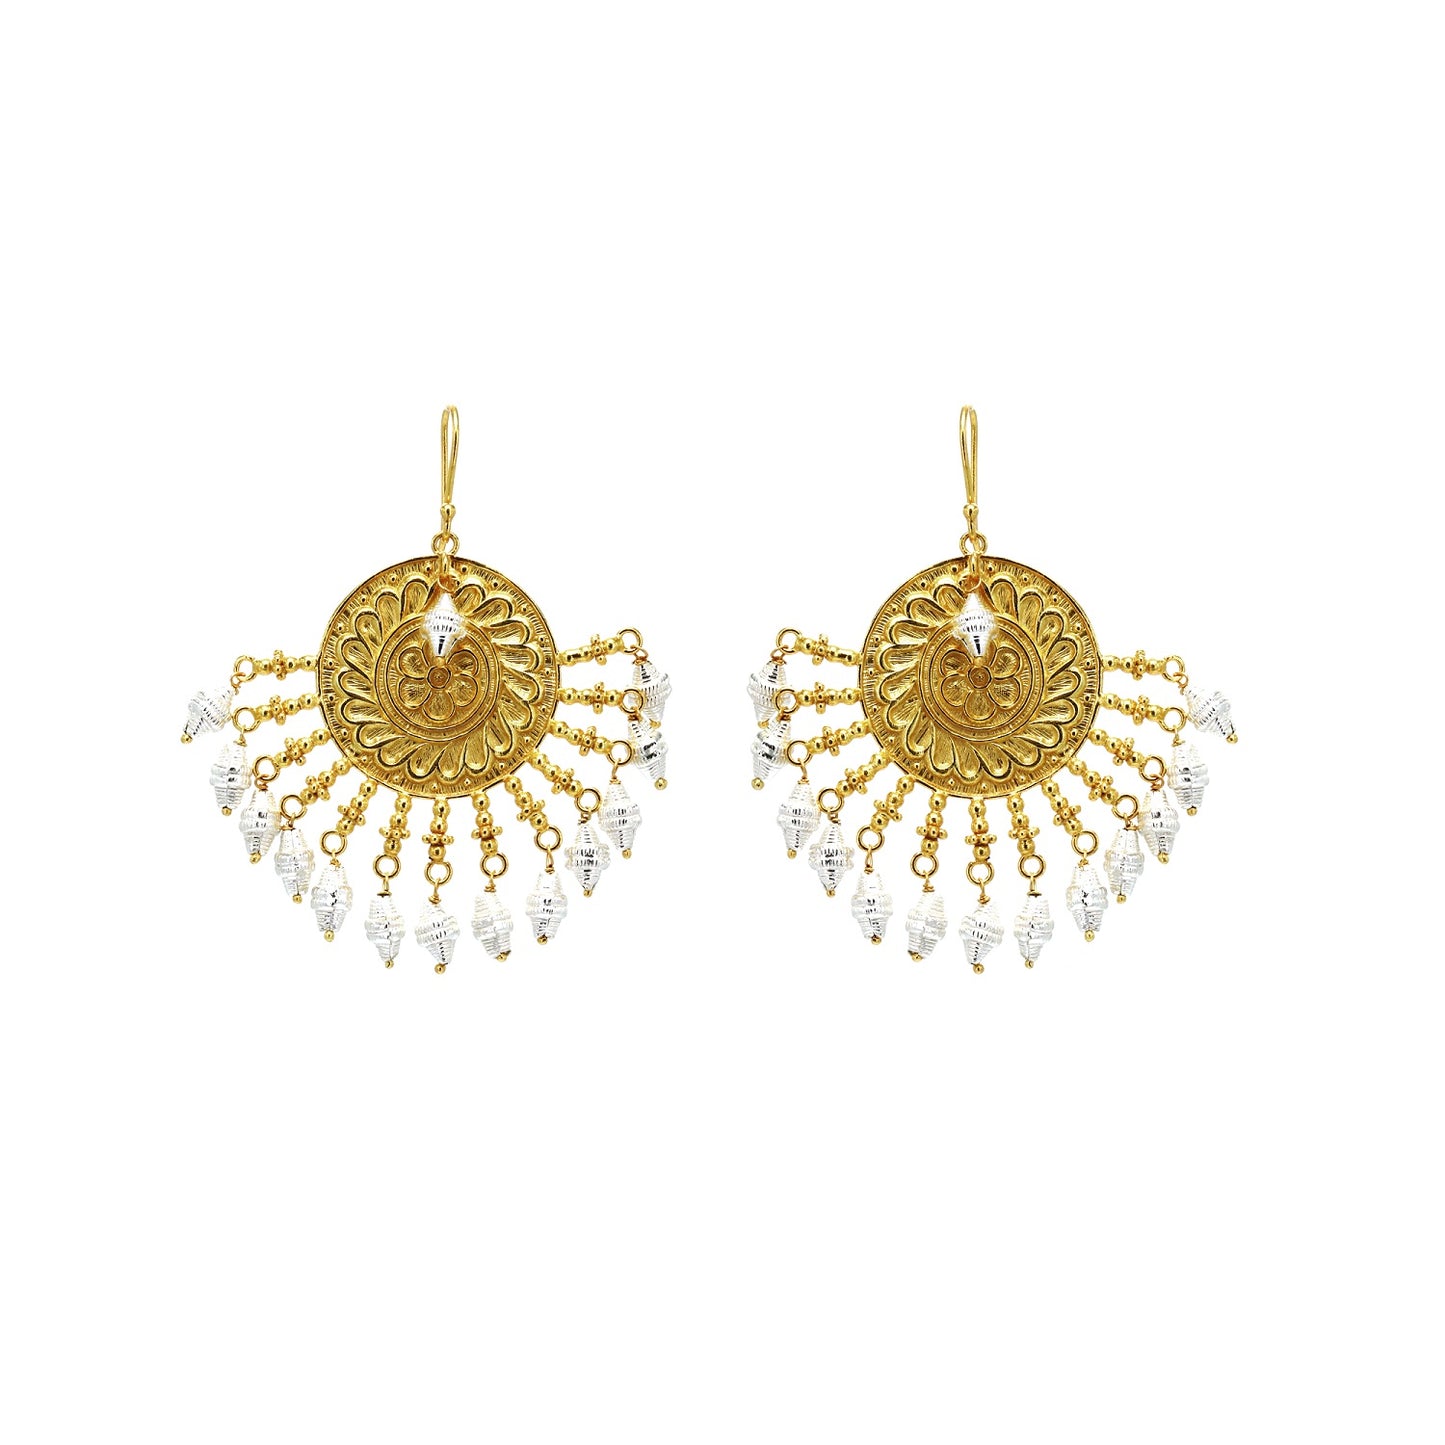 Gold Filled Designer Traditional Chandelier Earrings